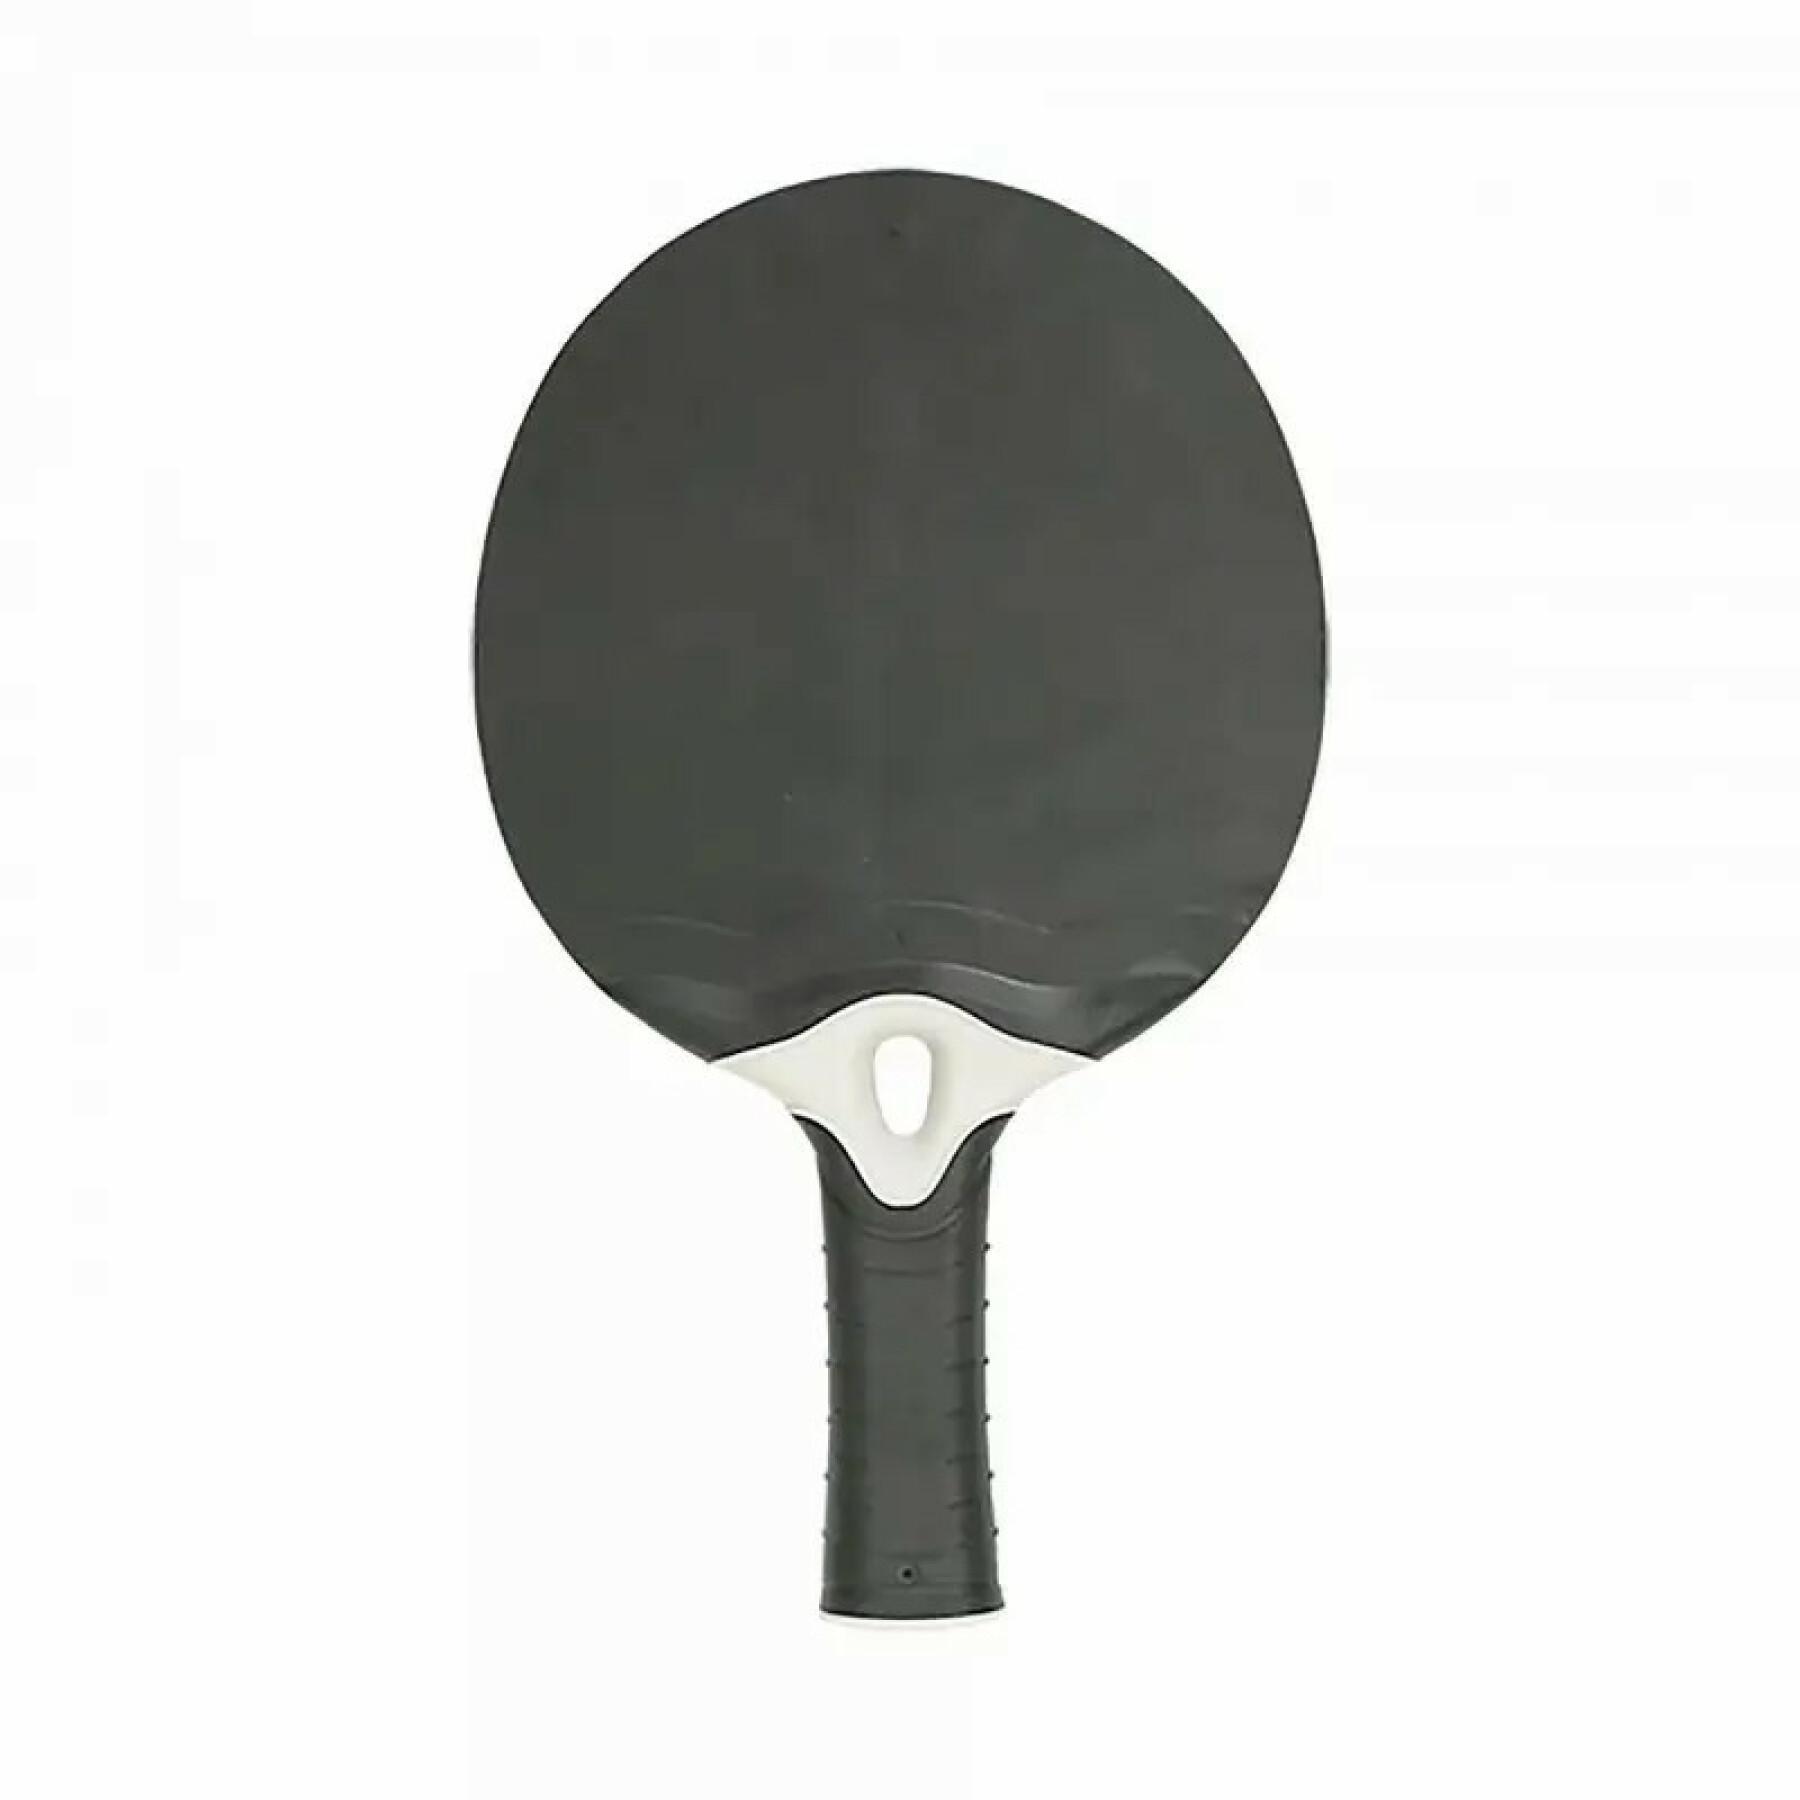 Table tennis racket Softee Energy